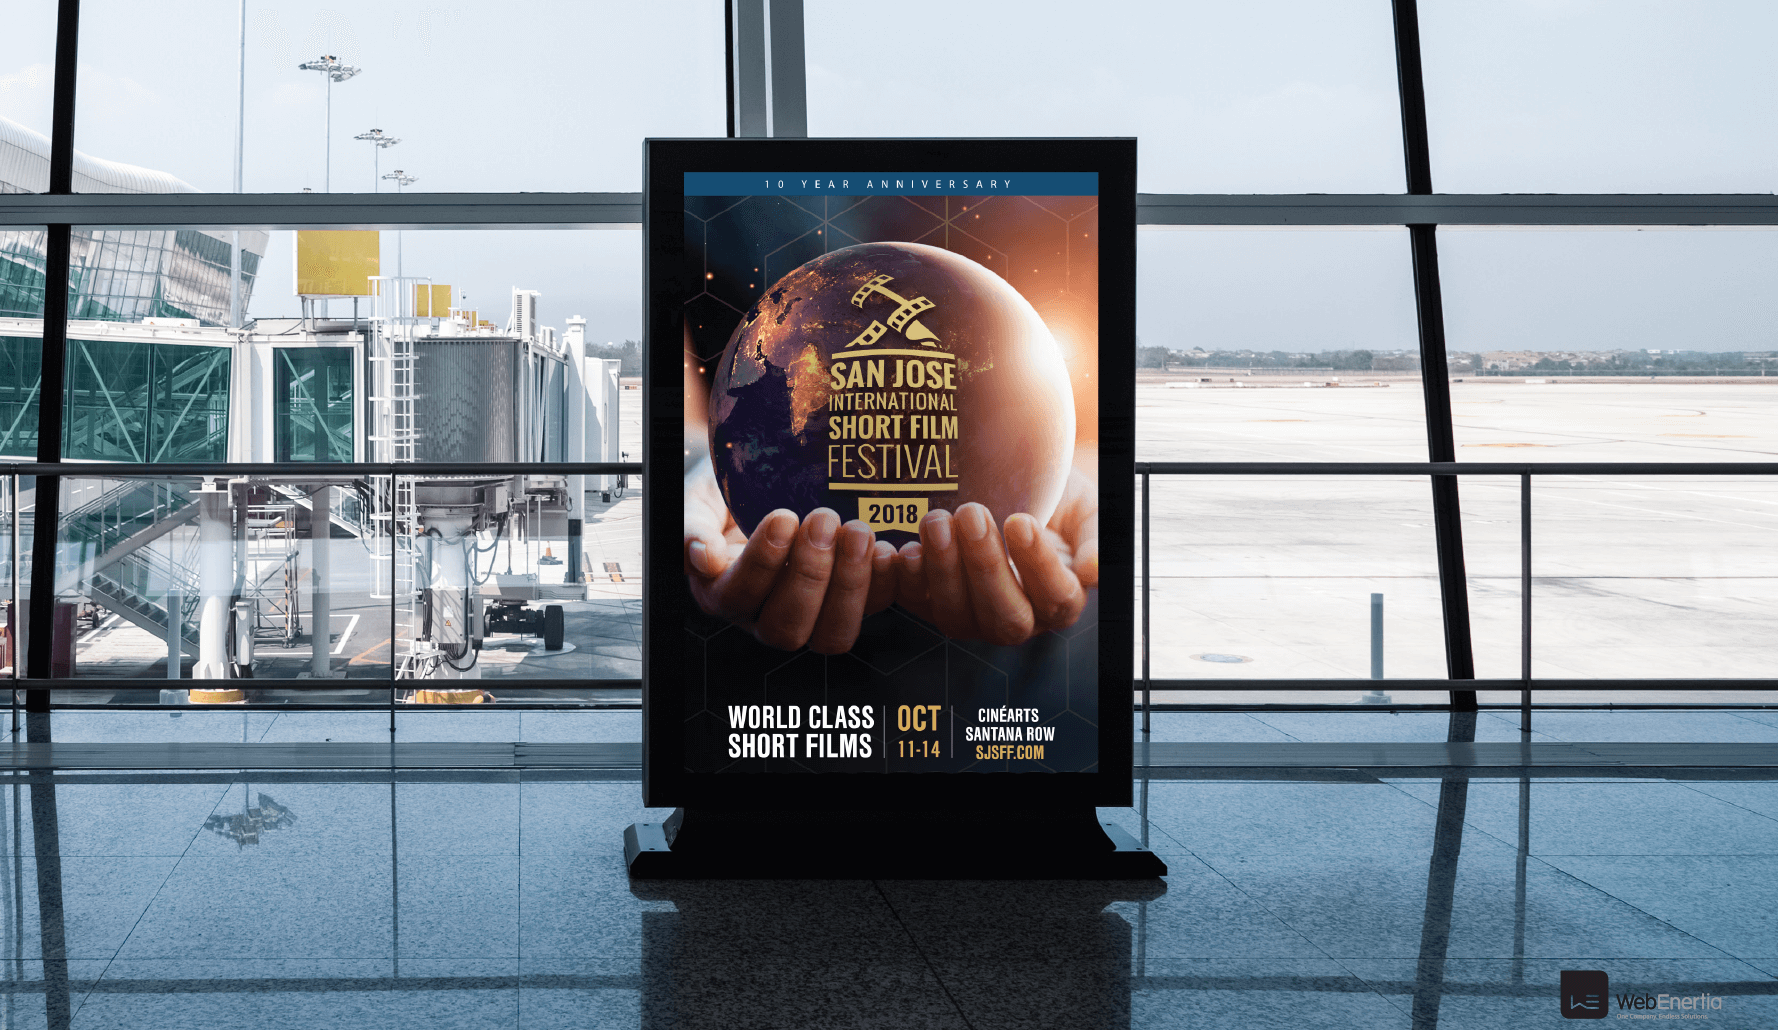 SJSSFF 2018 Campaign SJC airport advertisement